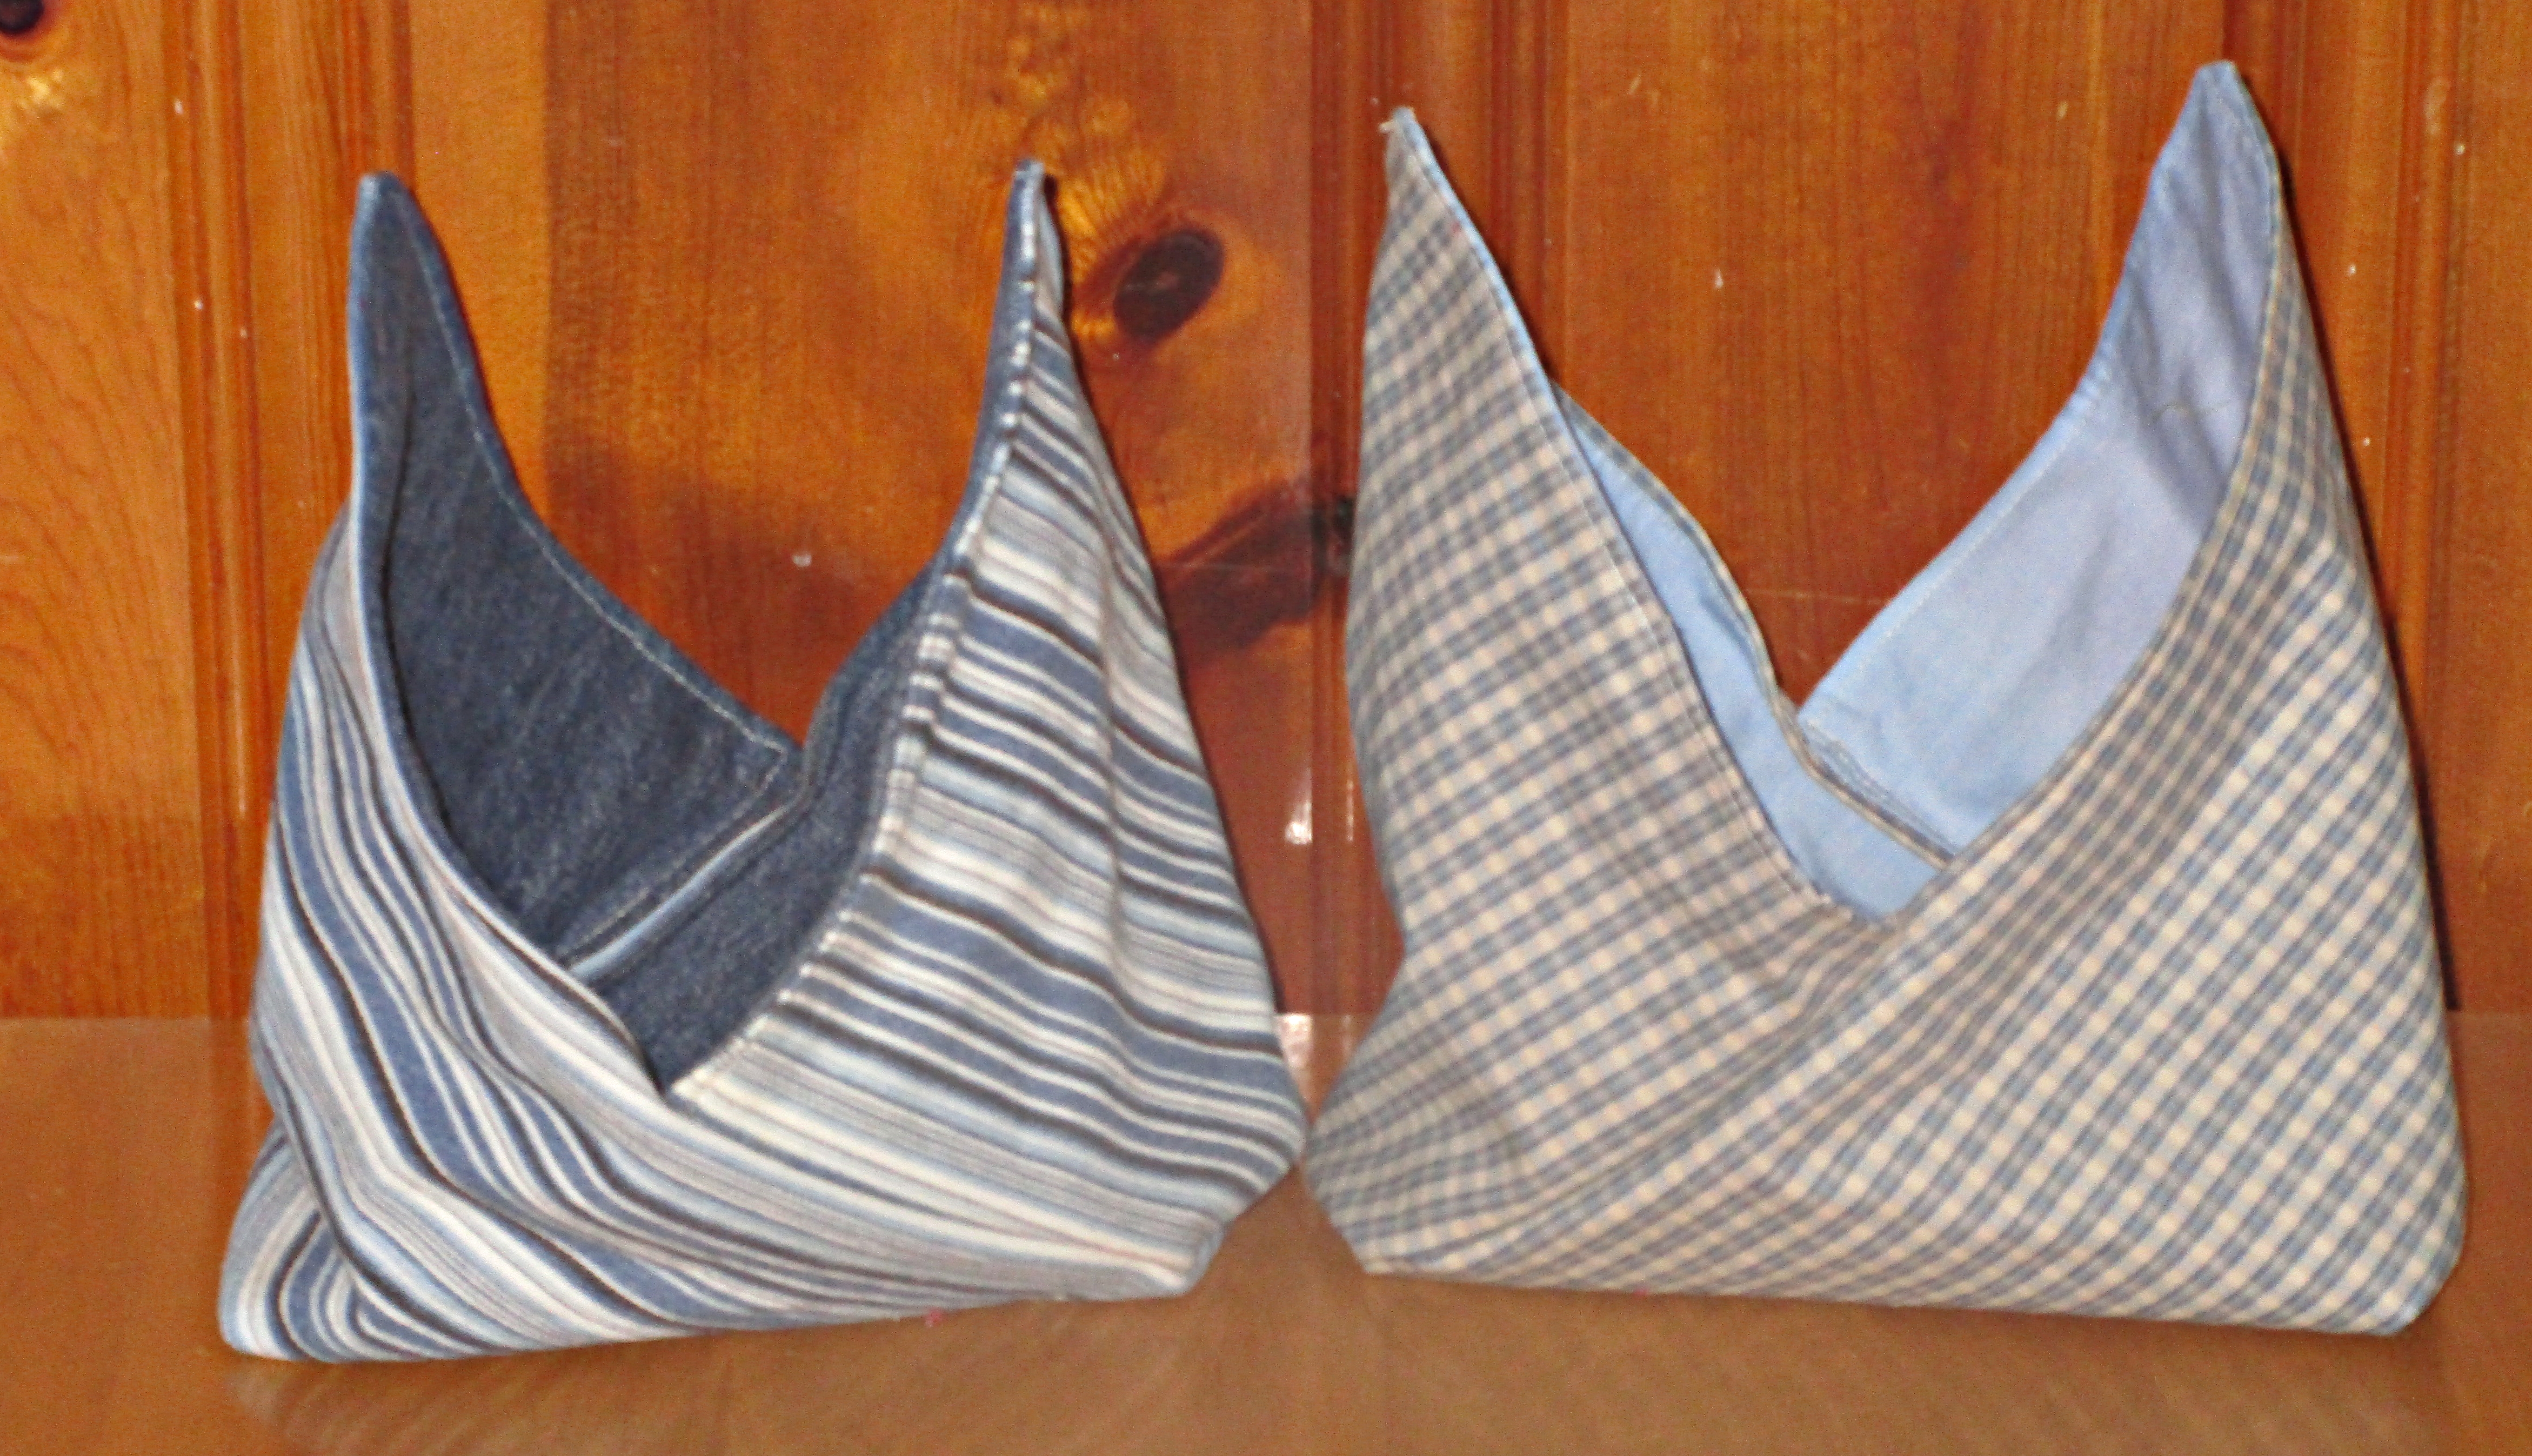 Kayajoy » { Happy Sewing } Origami Oasis Bento Bags